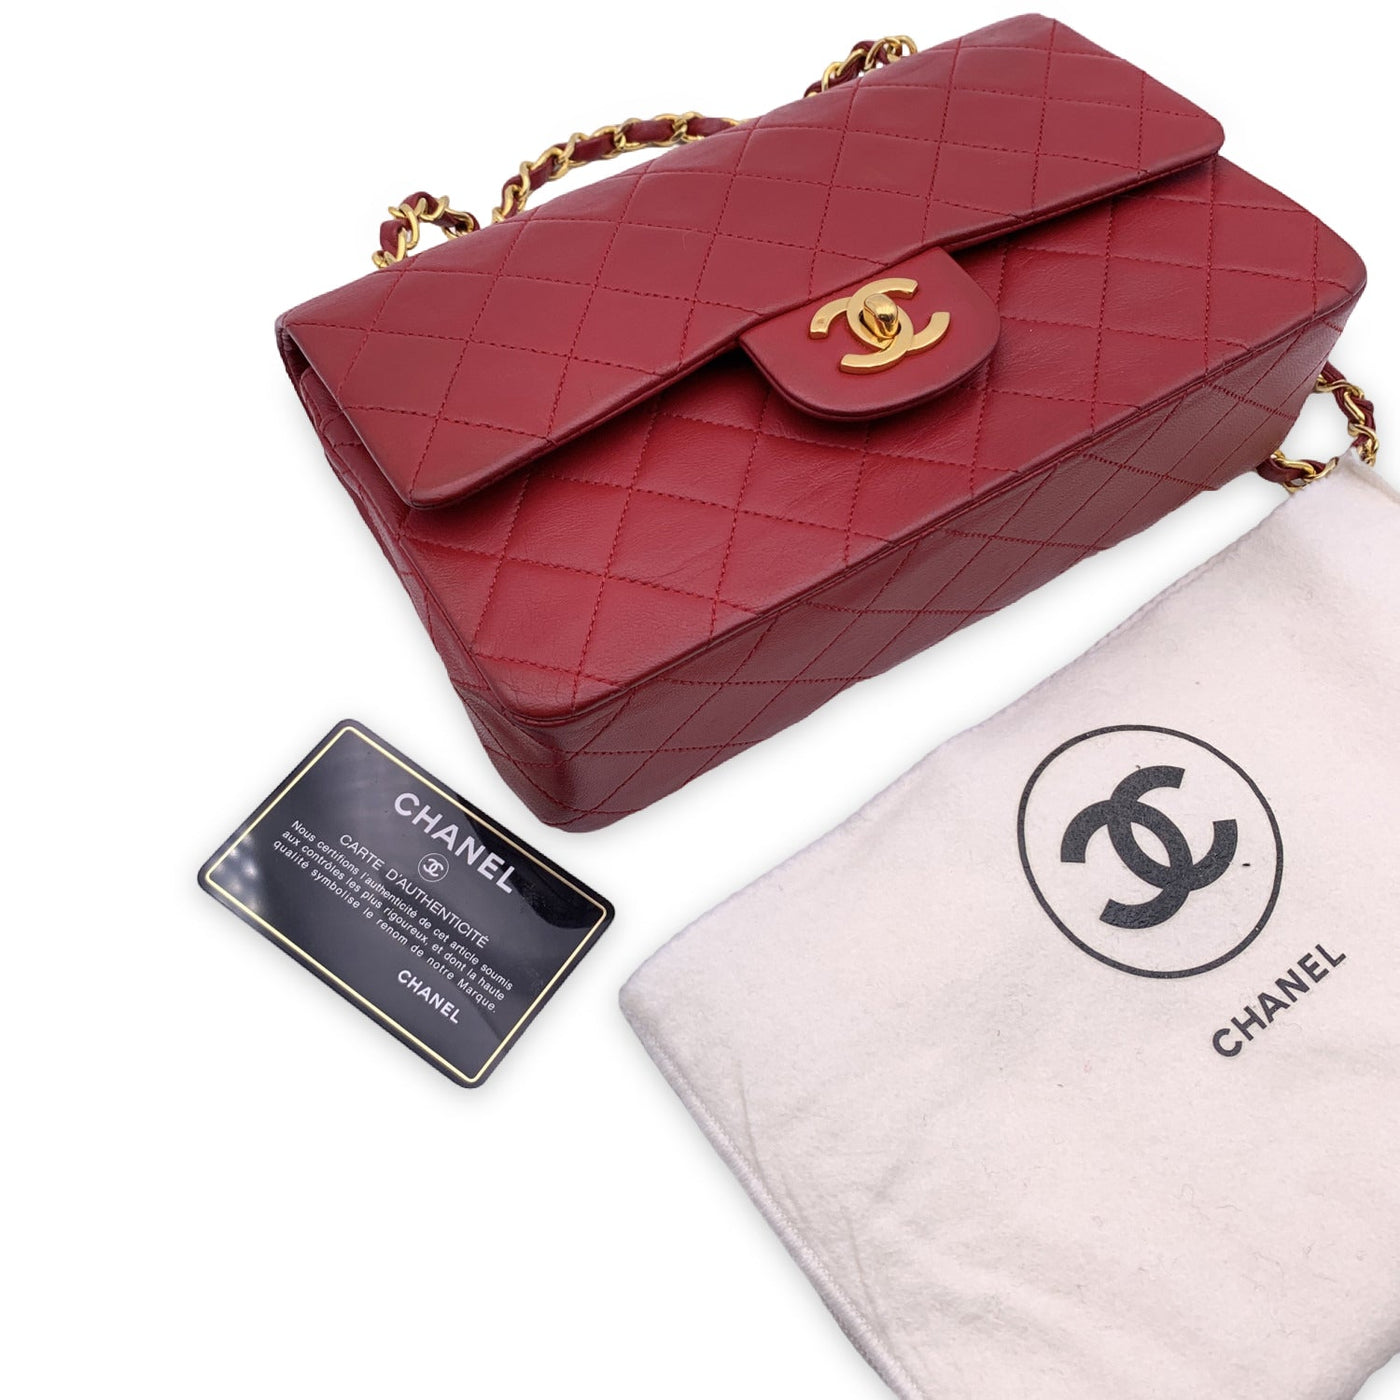 Chanel Vintage Red Quilted Timeless Classic 2.55 Shoulder Bag 25